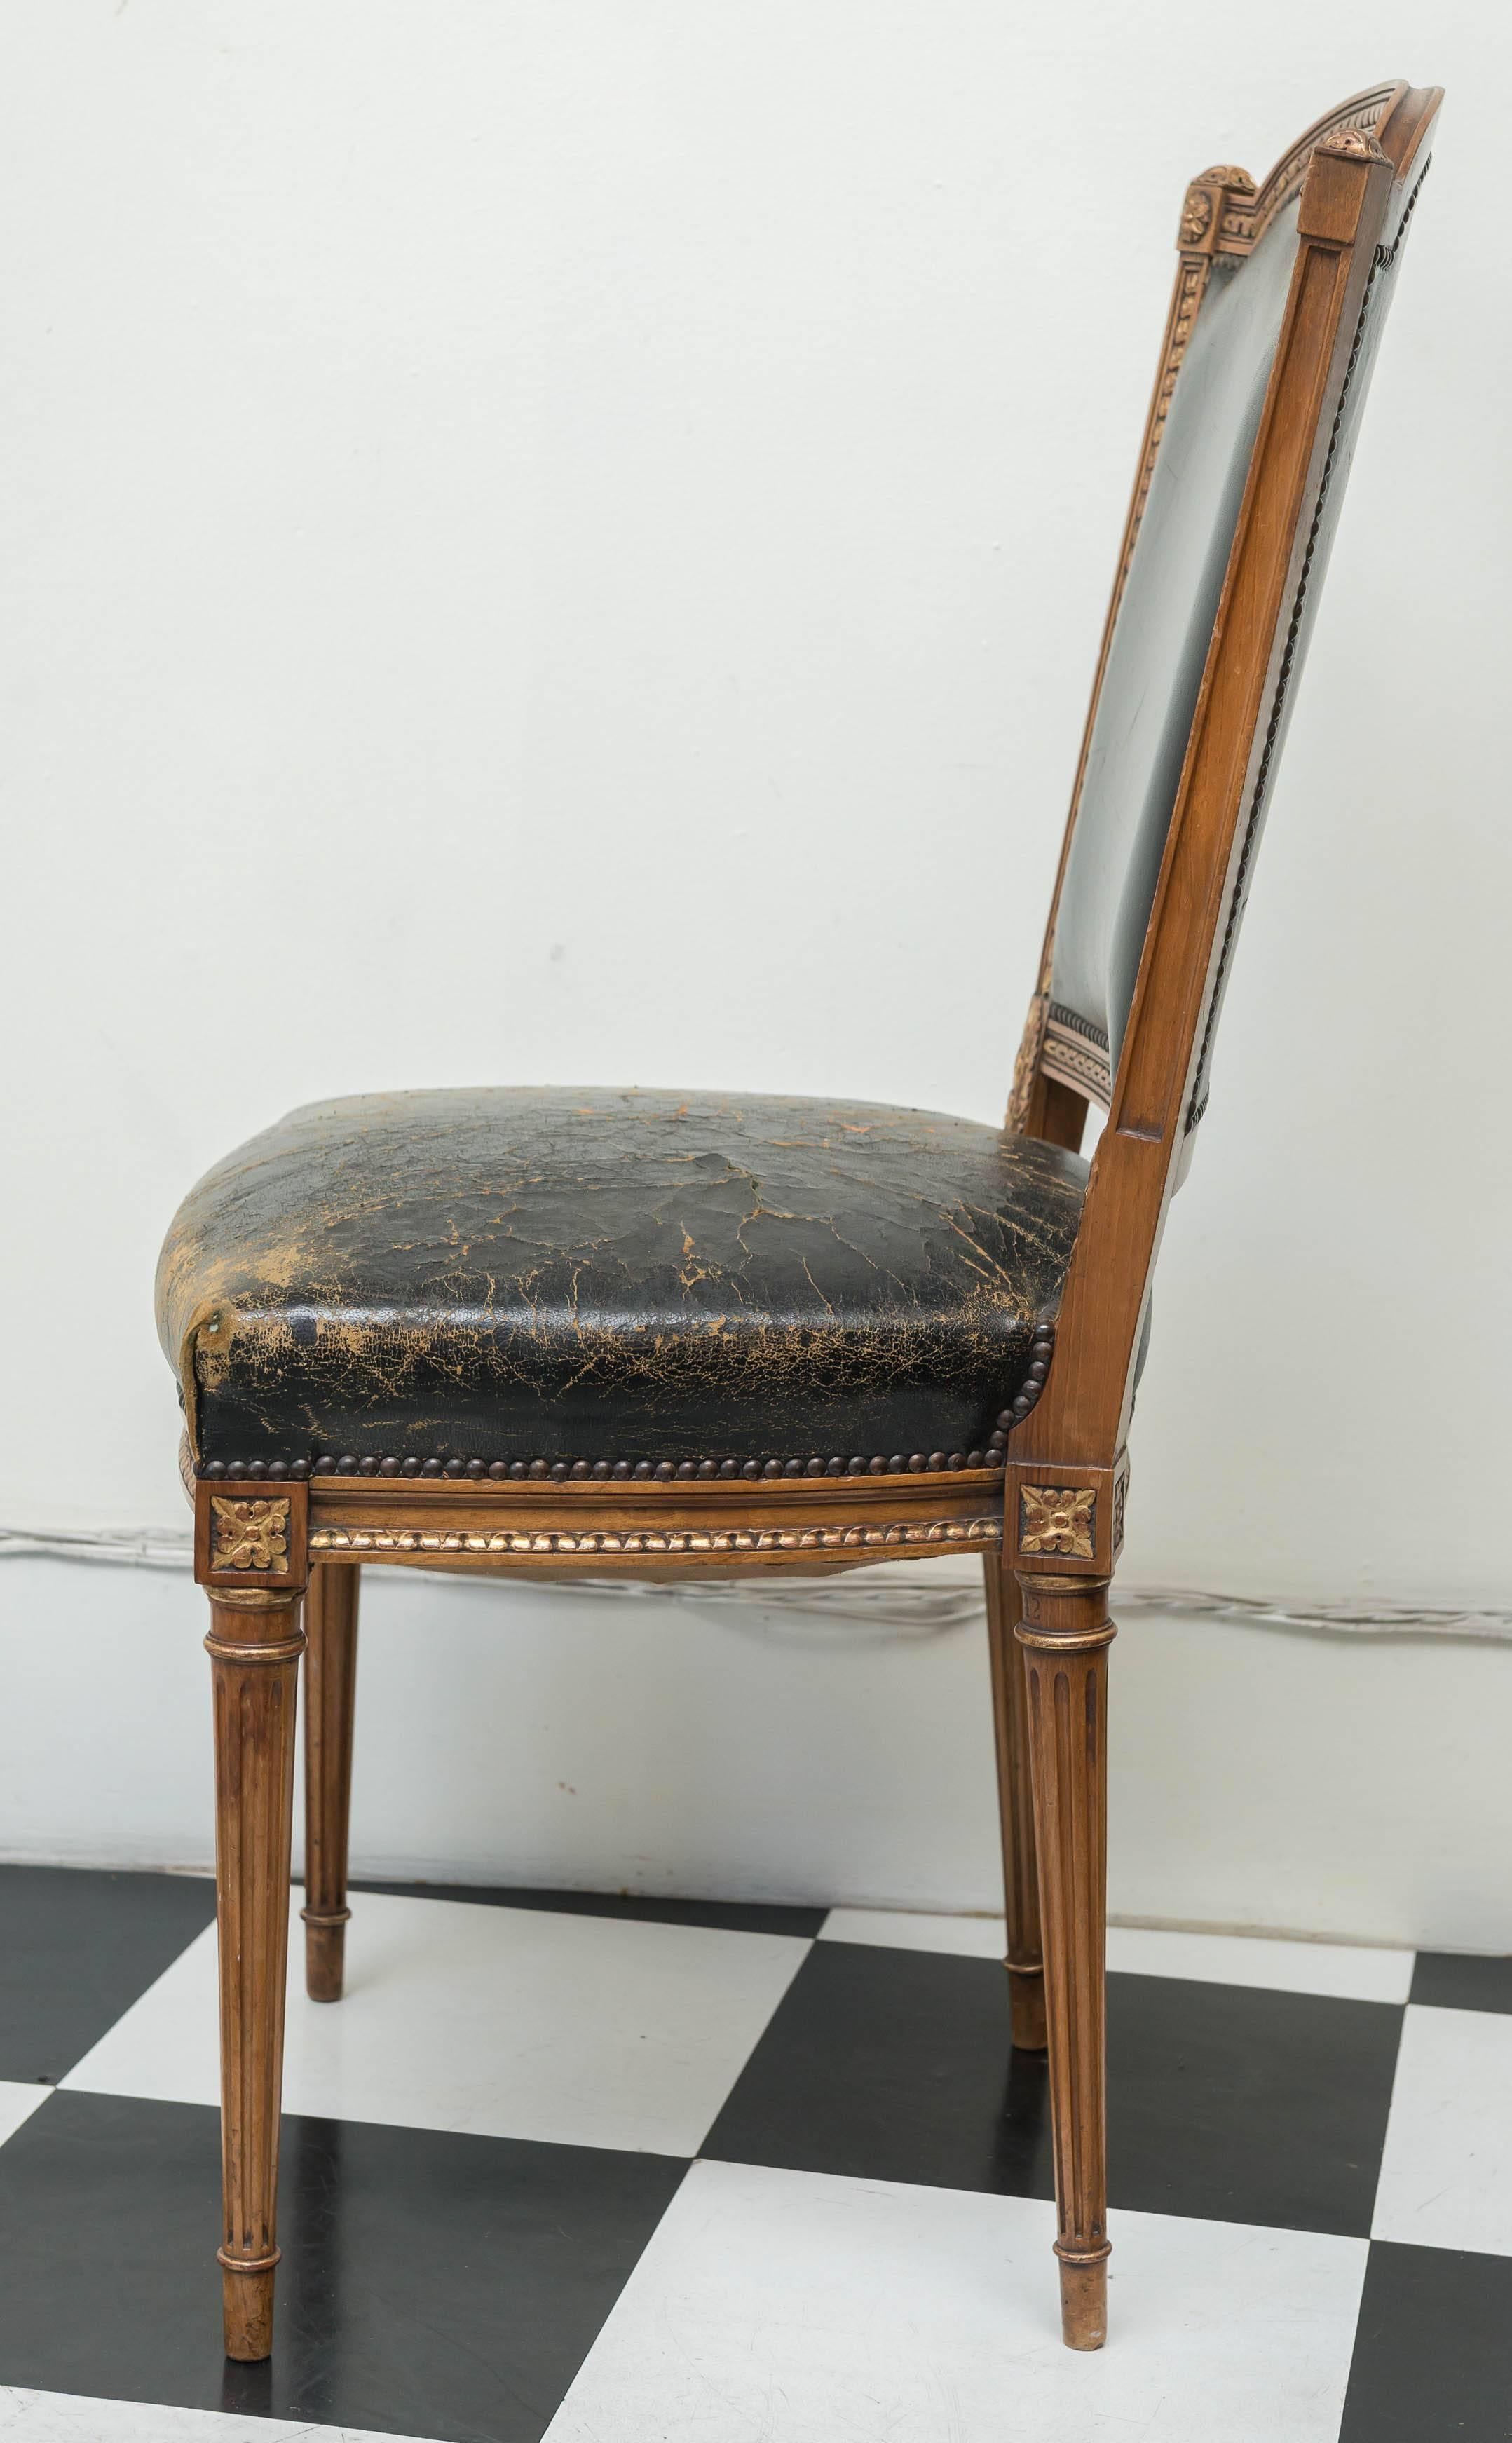 Early 20th Century Louis XVI Revival Style Chair by Simon Loscertales Bona, Zaragosa, Spain